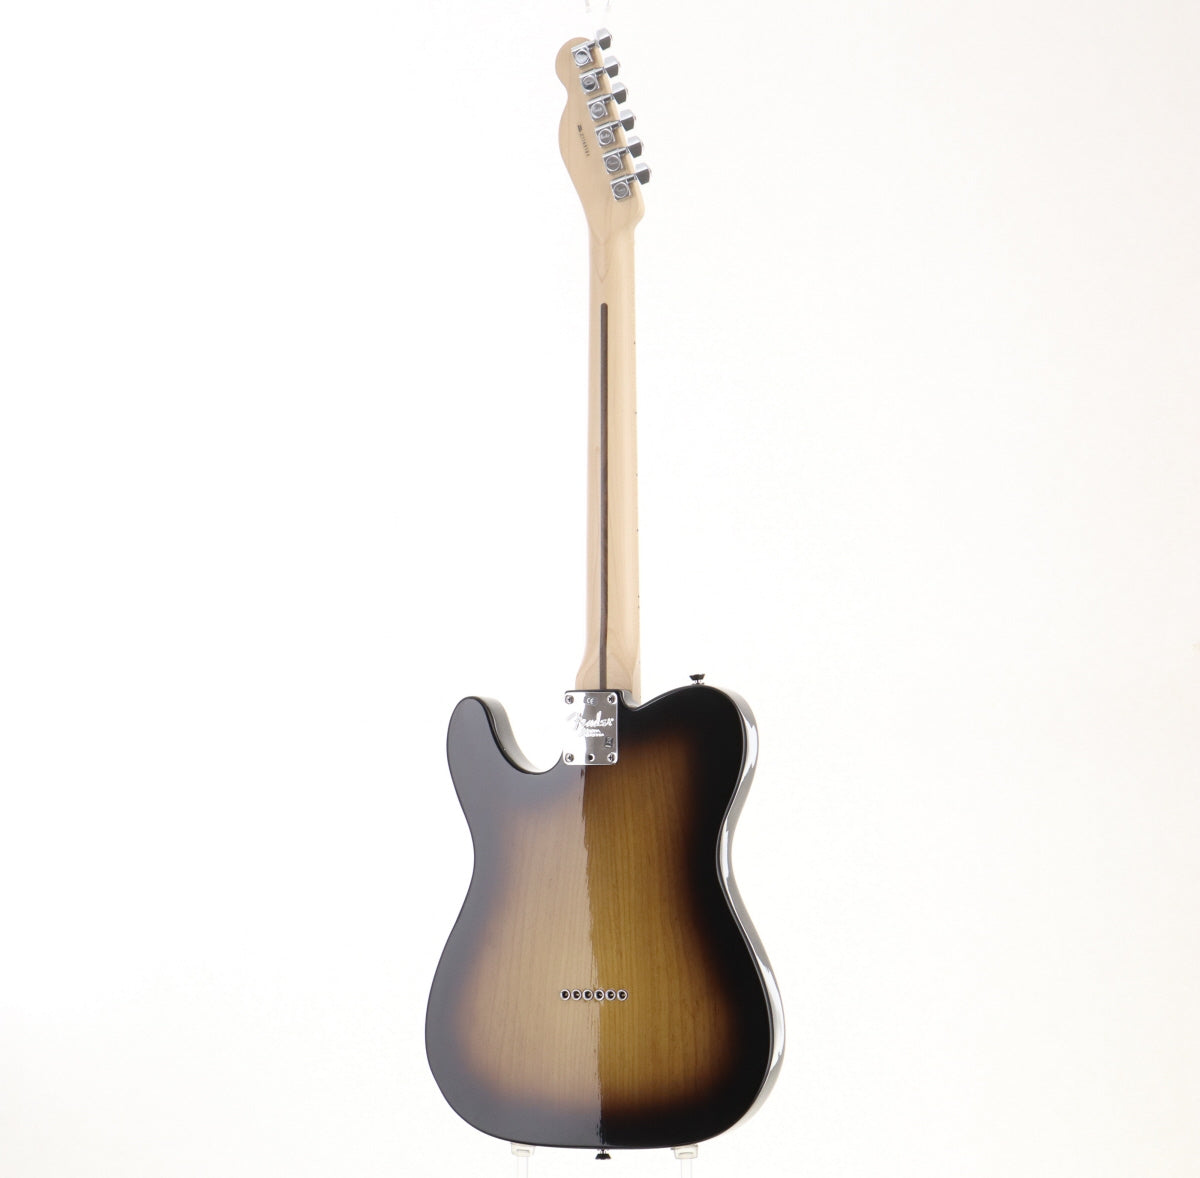 [SN Z7169191] USED Fender / American Telecaster 2-Color Sunburst Maple Fingerboard 2007 [09]